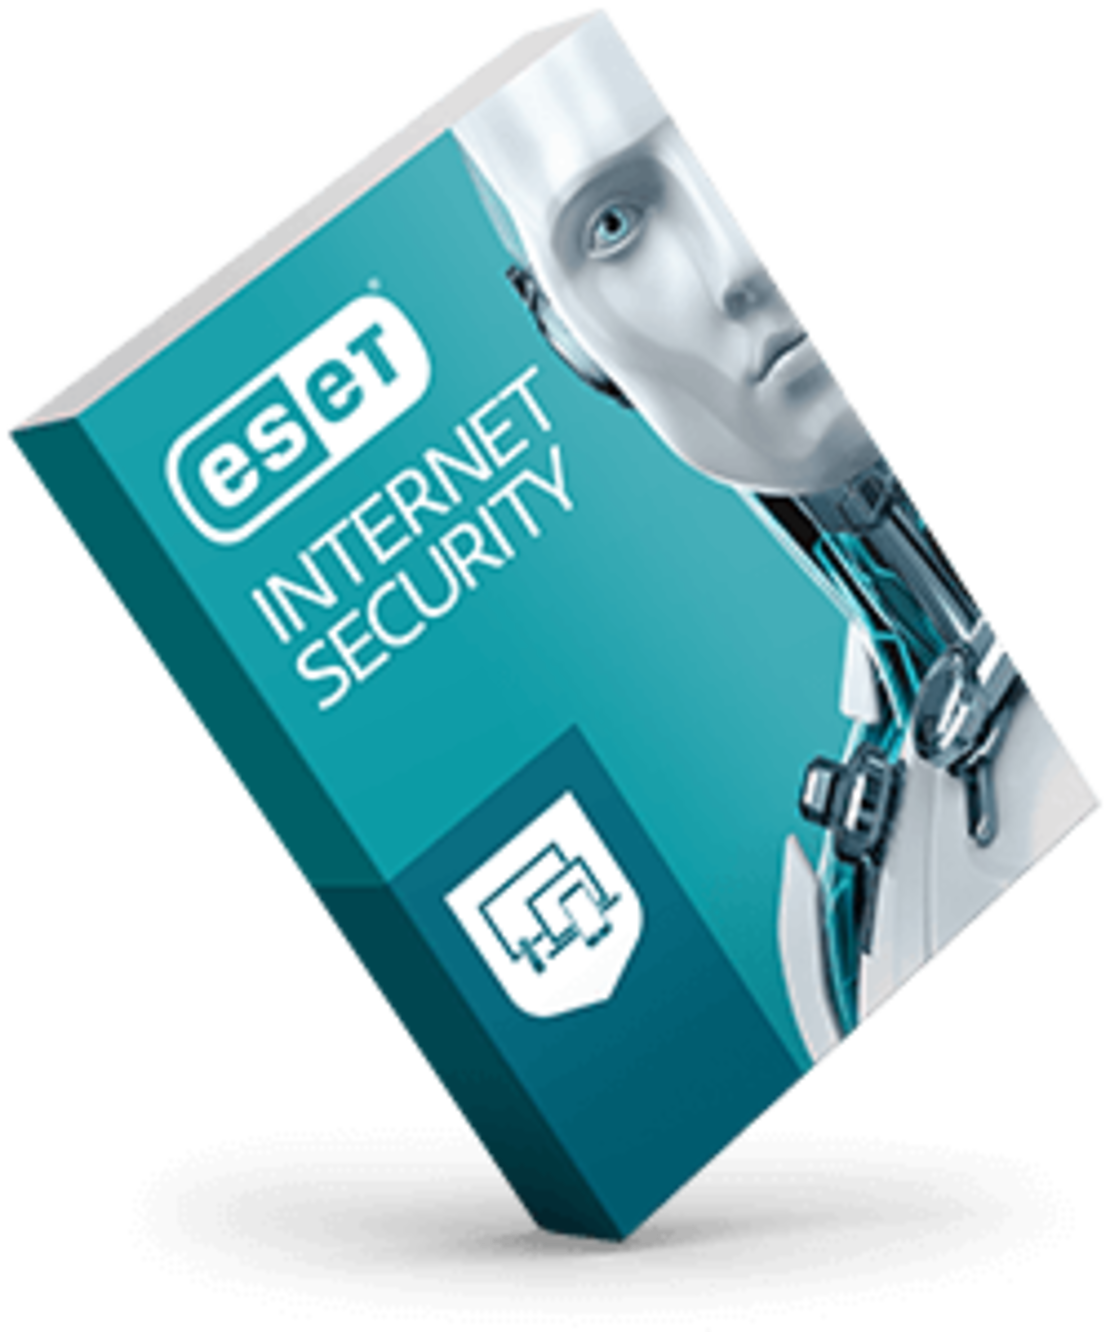 ESET Internet Security שני מחשבים שנה אחת